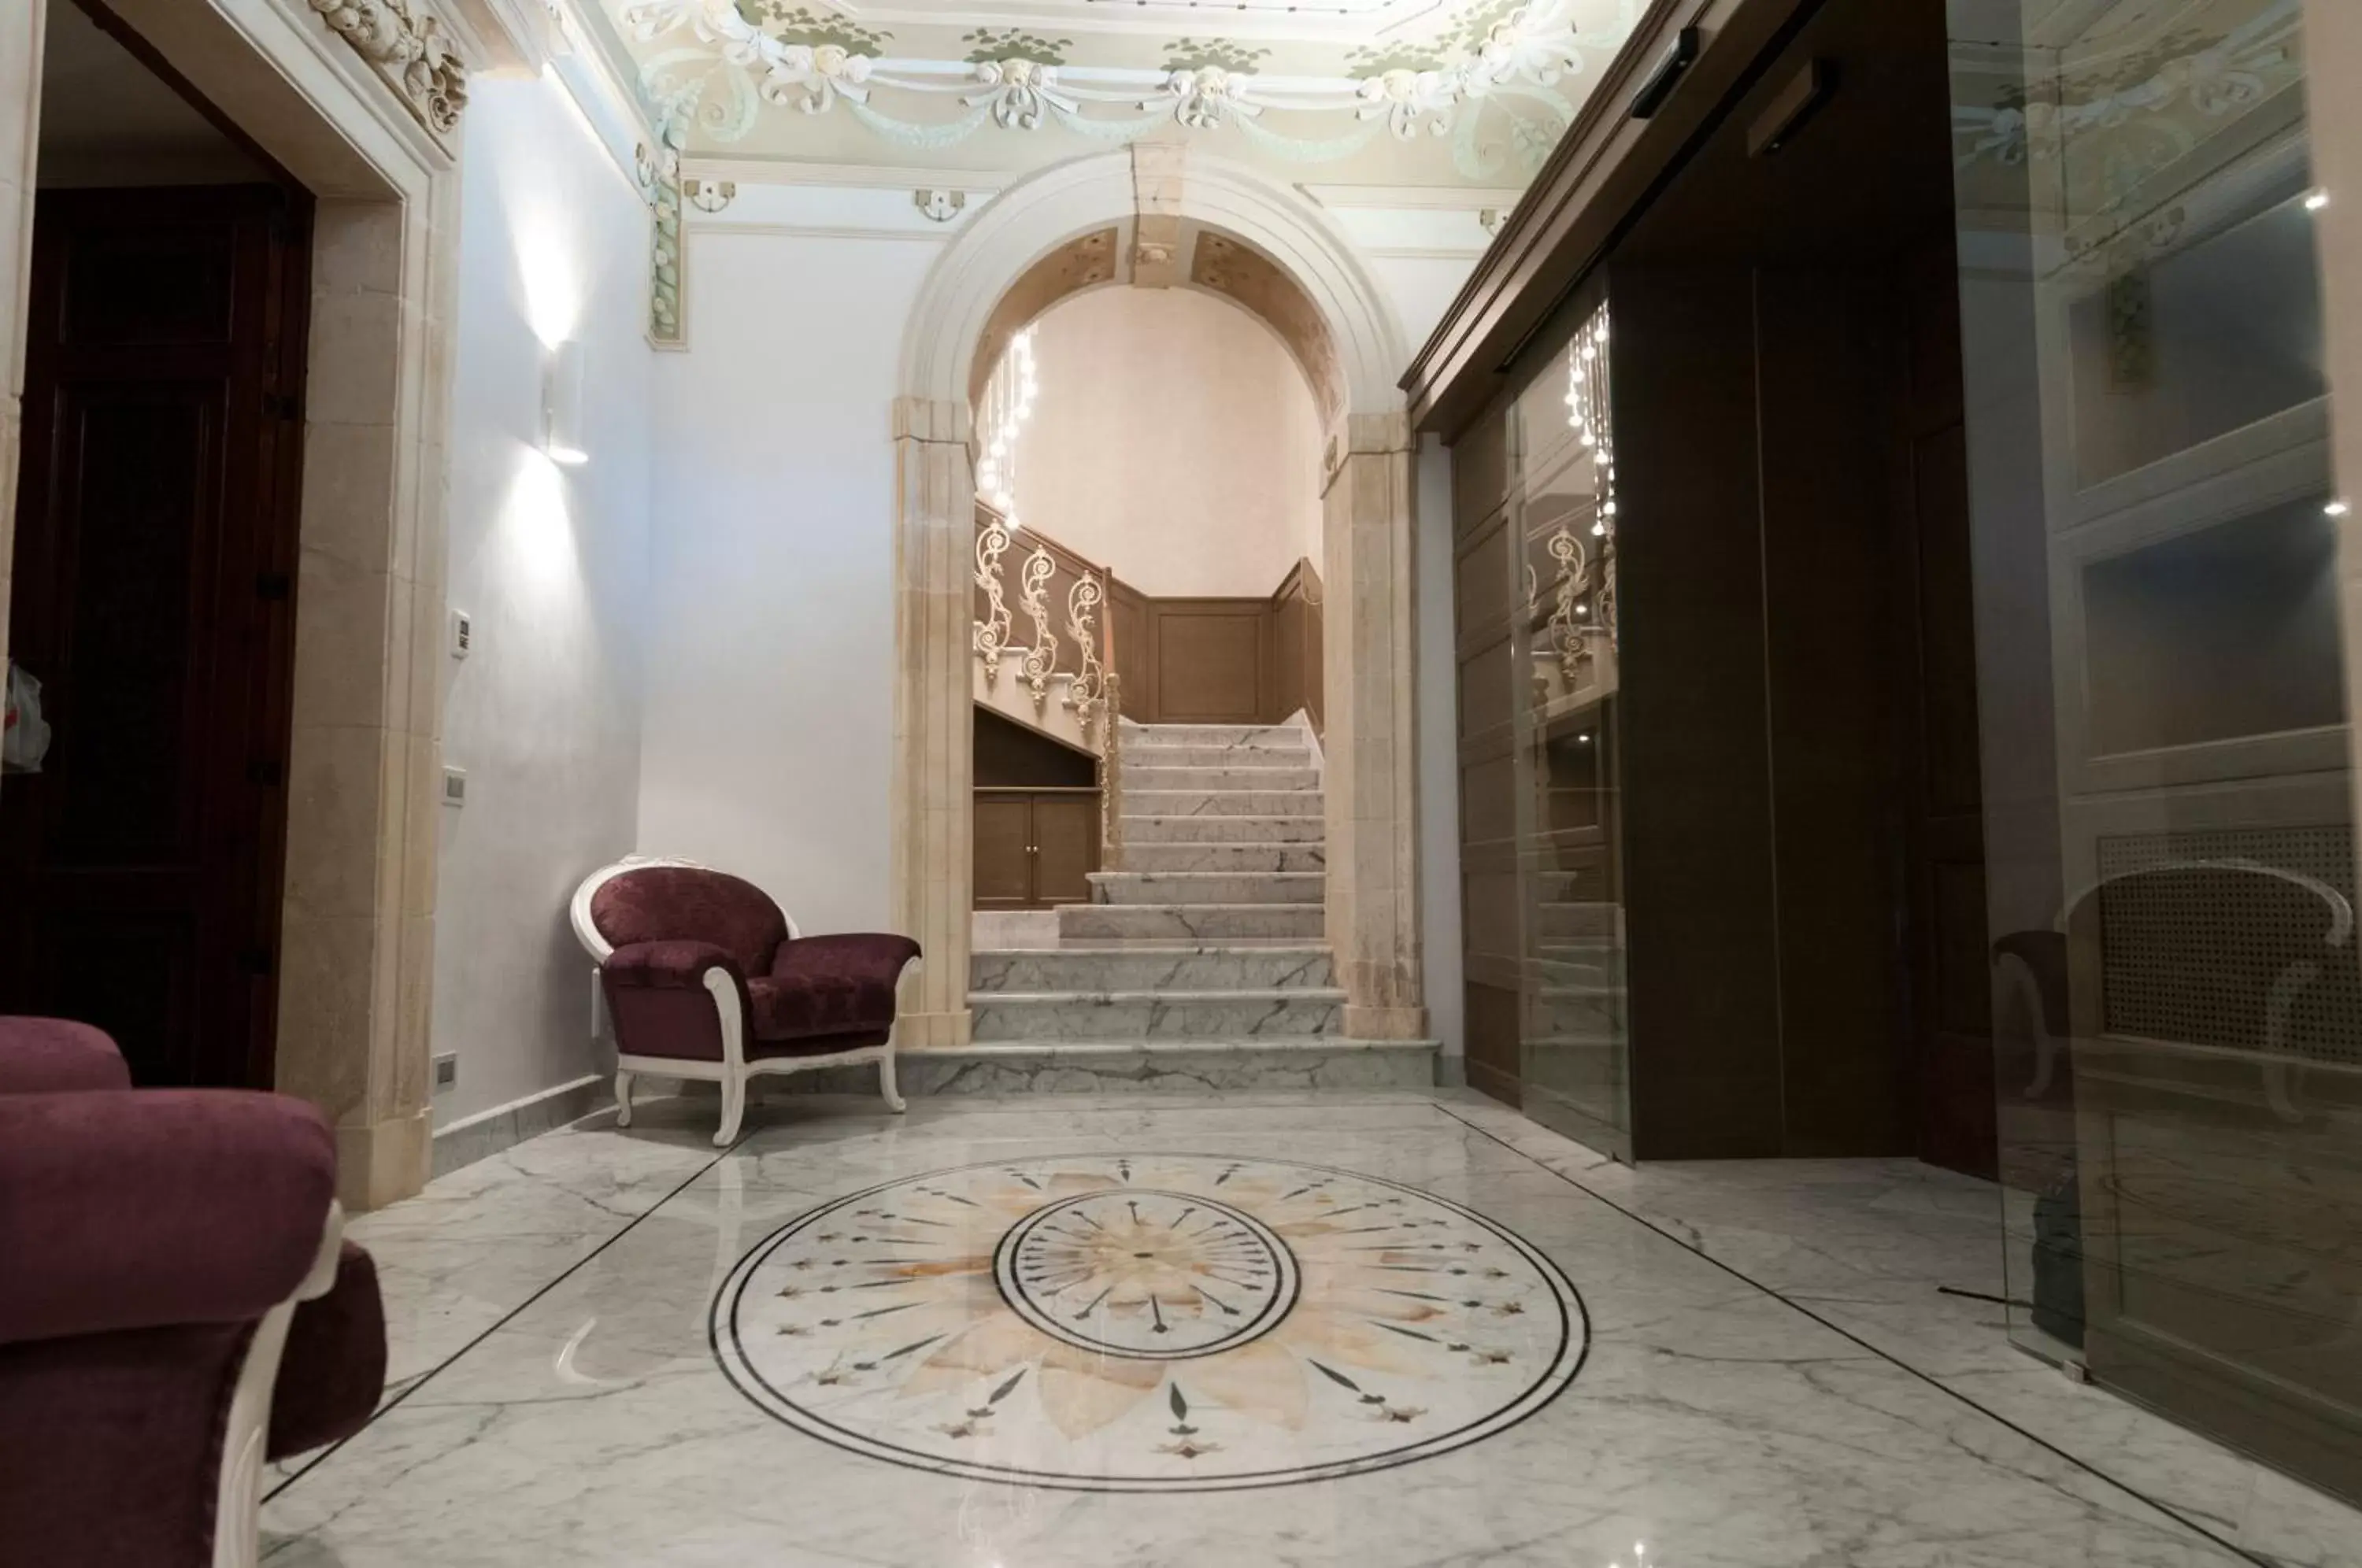 Lobby or reception in Palazzo Favacchio - Patanè